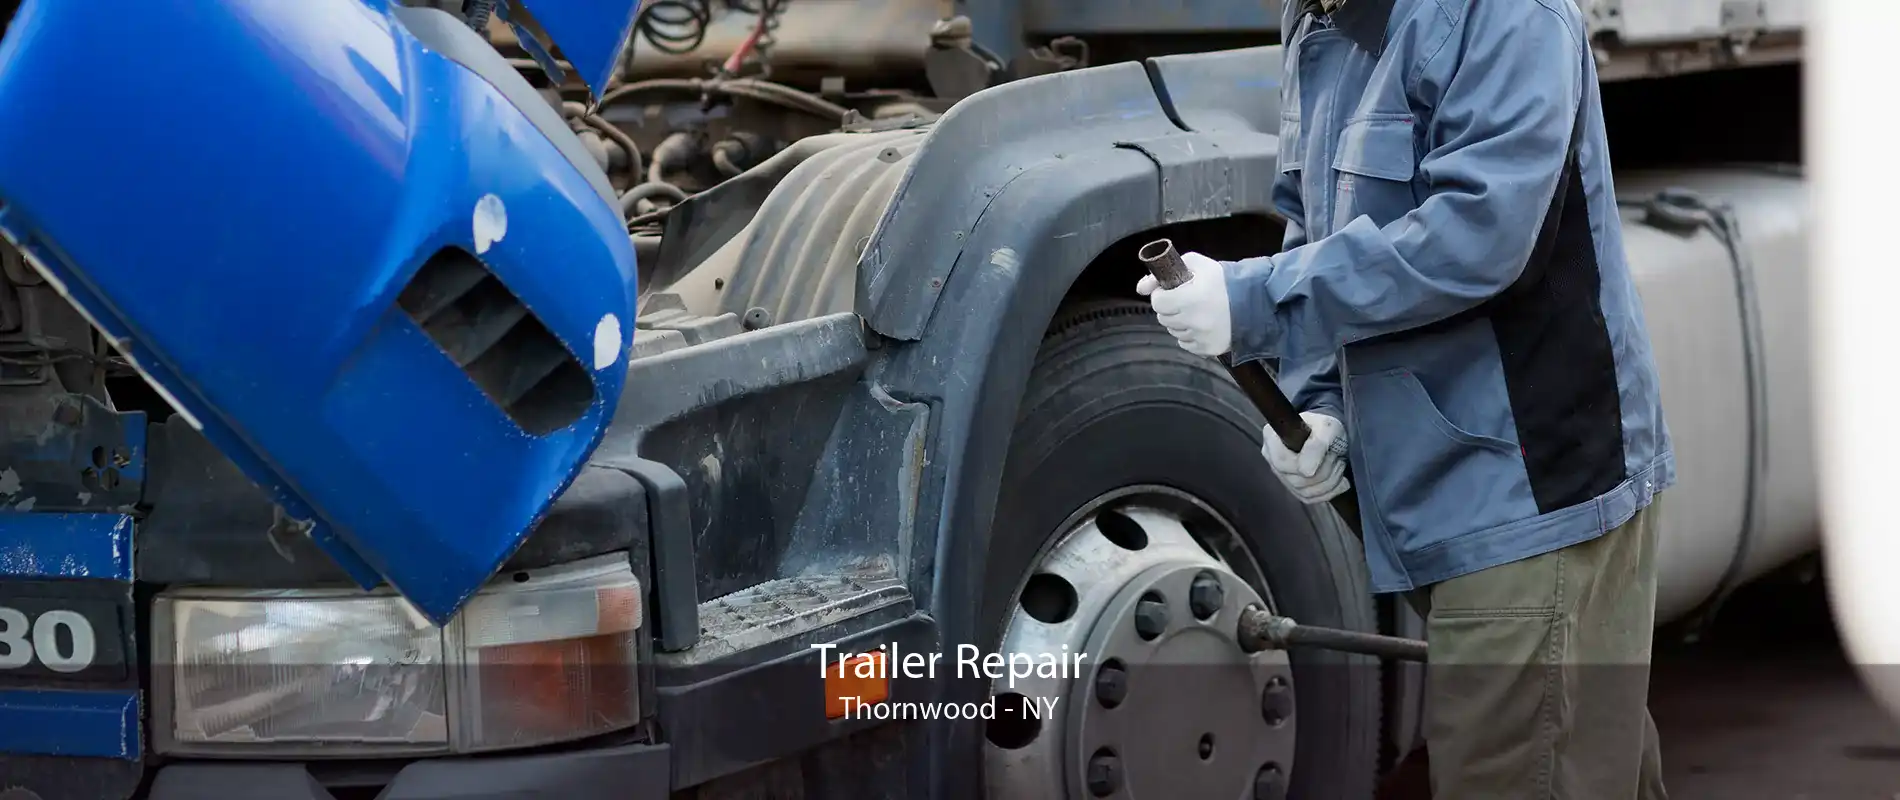 Trailer Repair Thornwood - NY